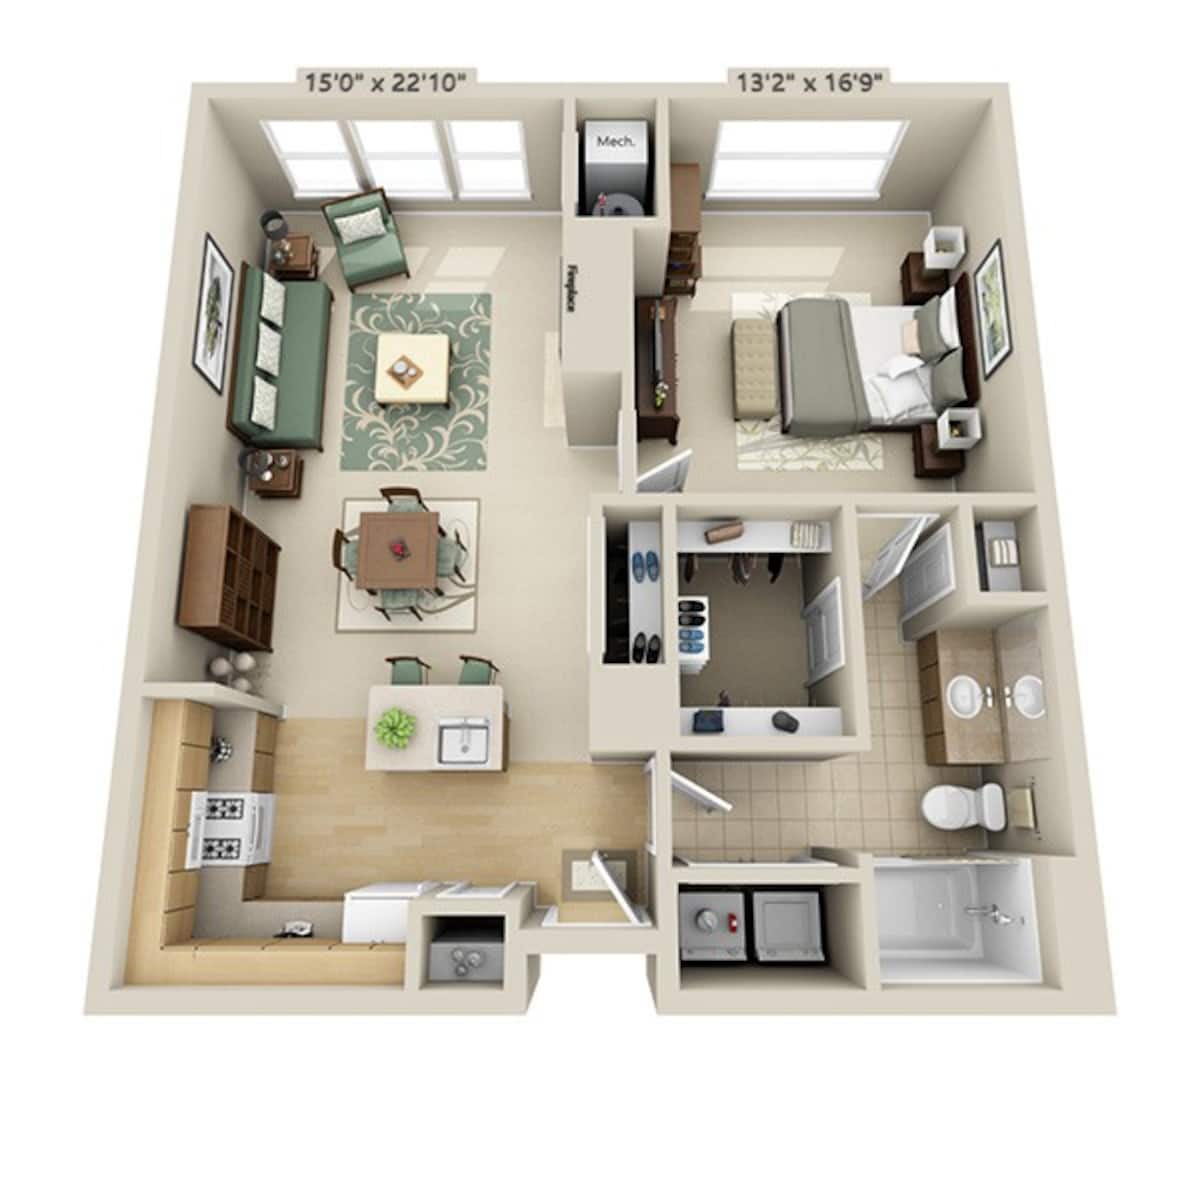 Floorplan diagram for One Bedroom A1I, showing 1 bedroom